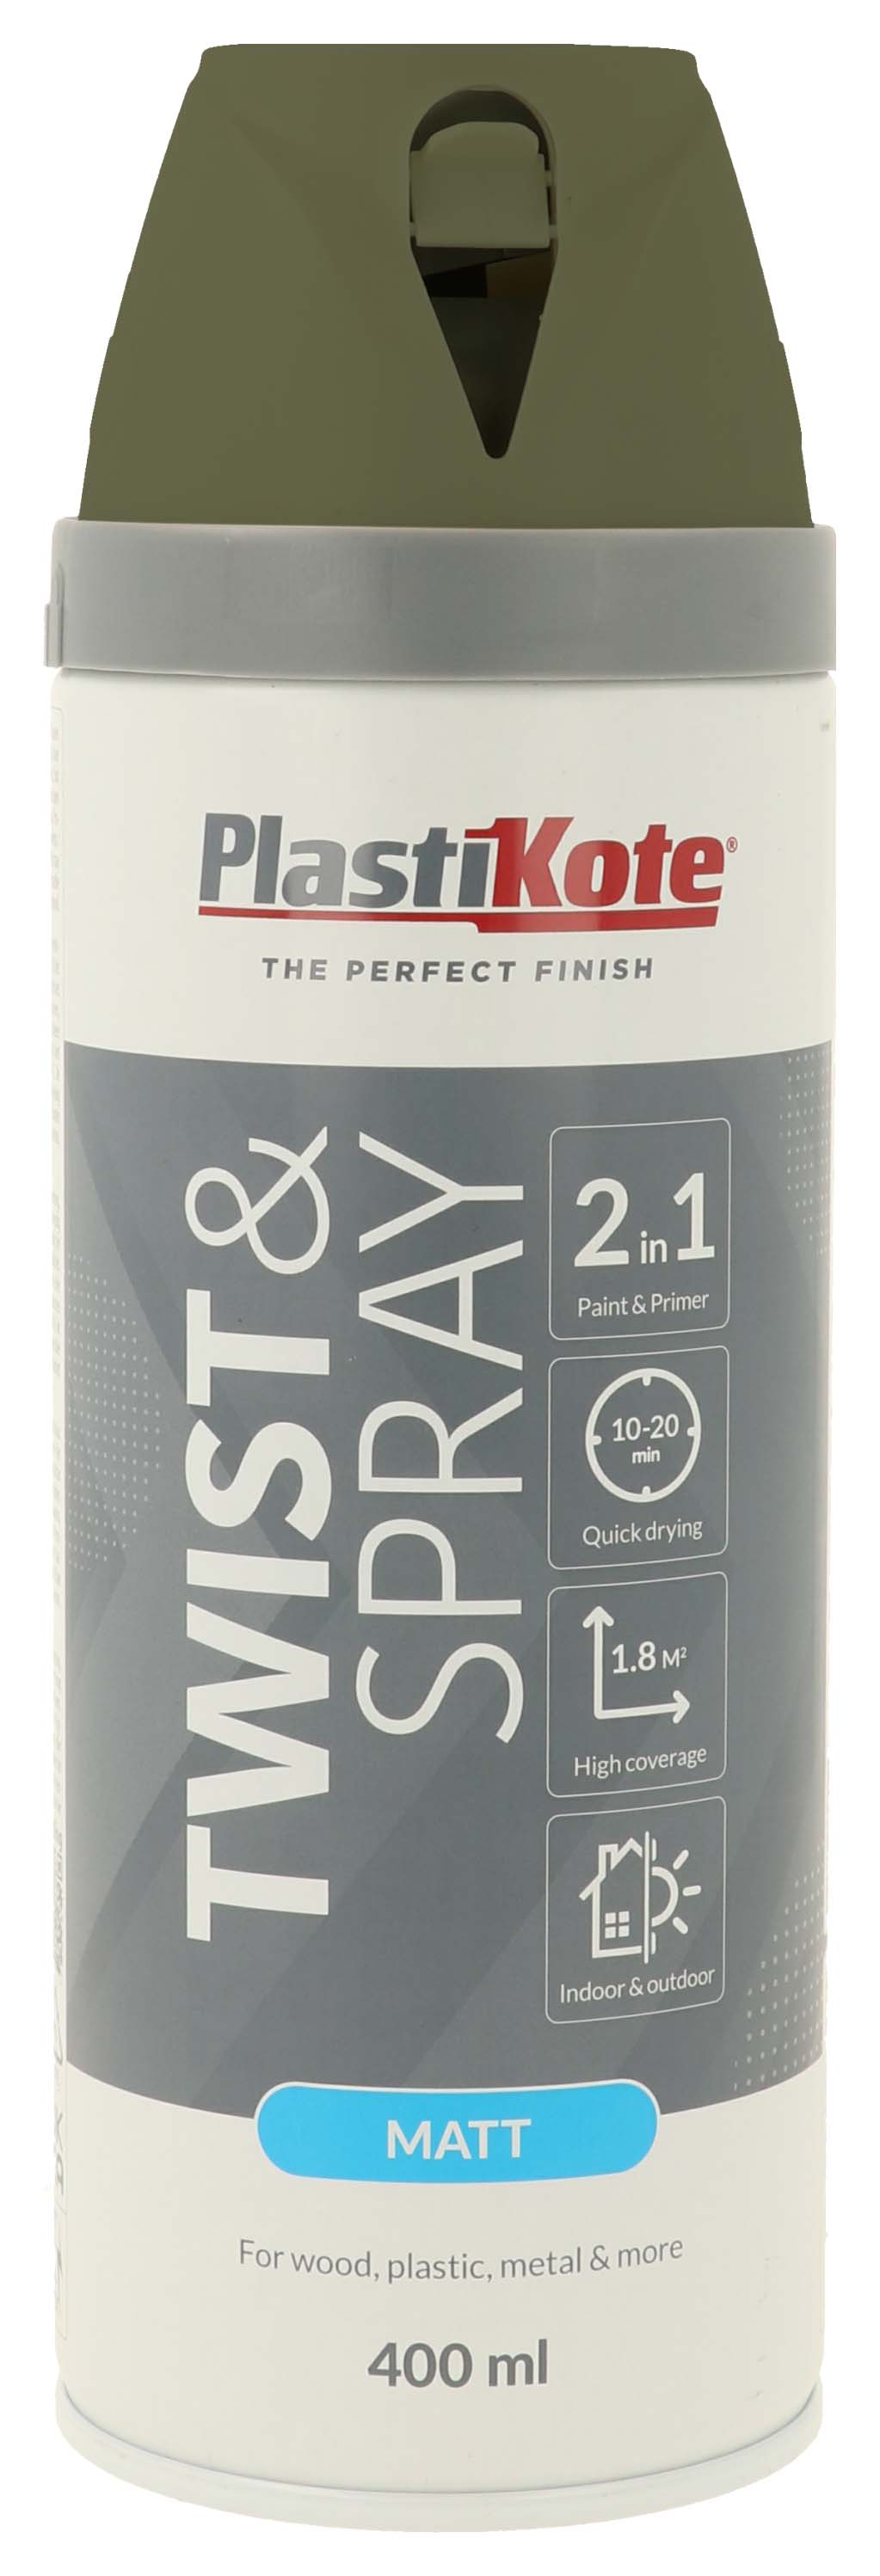 PlastiKote Twist & Spray 2 in 1 Spray Paint - Olive Green - 400ml